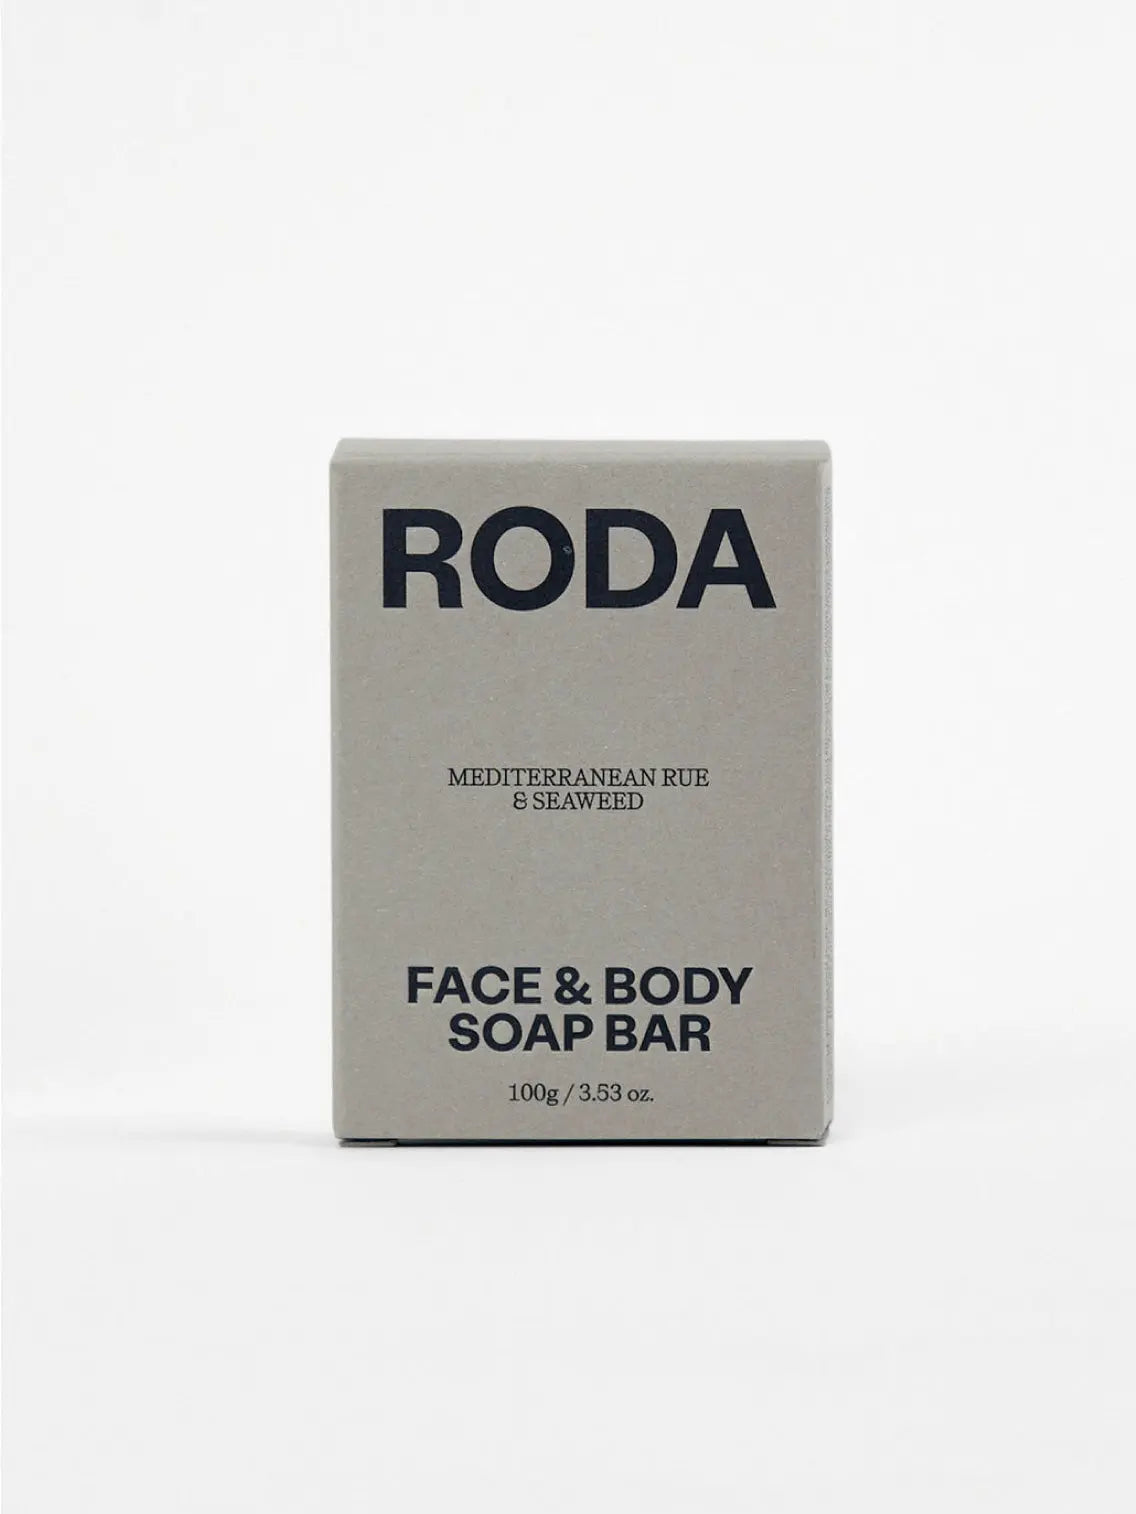 Face & Body Soap Bar - Mediterranean Rue & Seaweed Roda